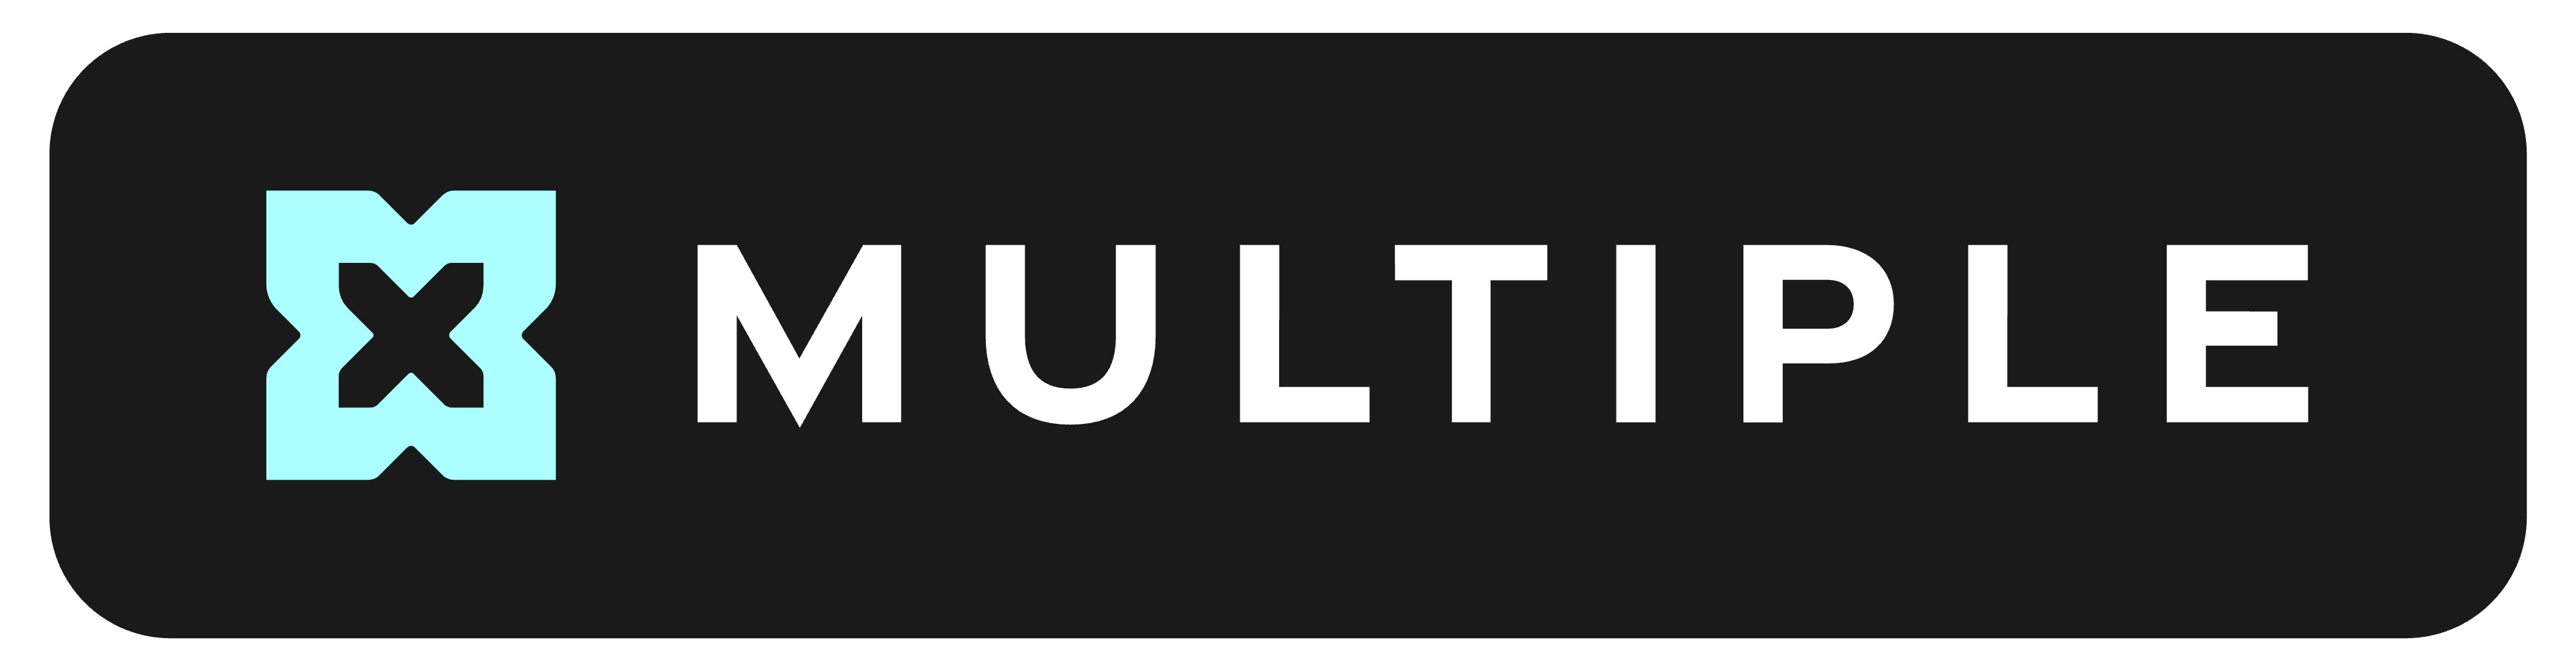 MULTIPLE company logo